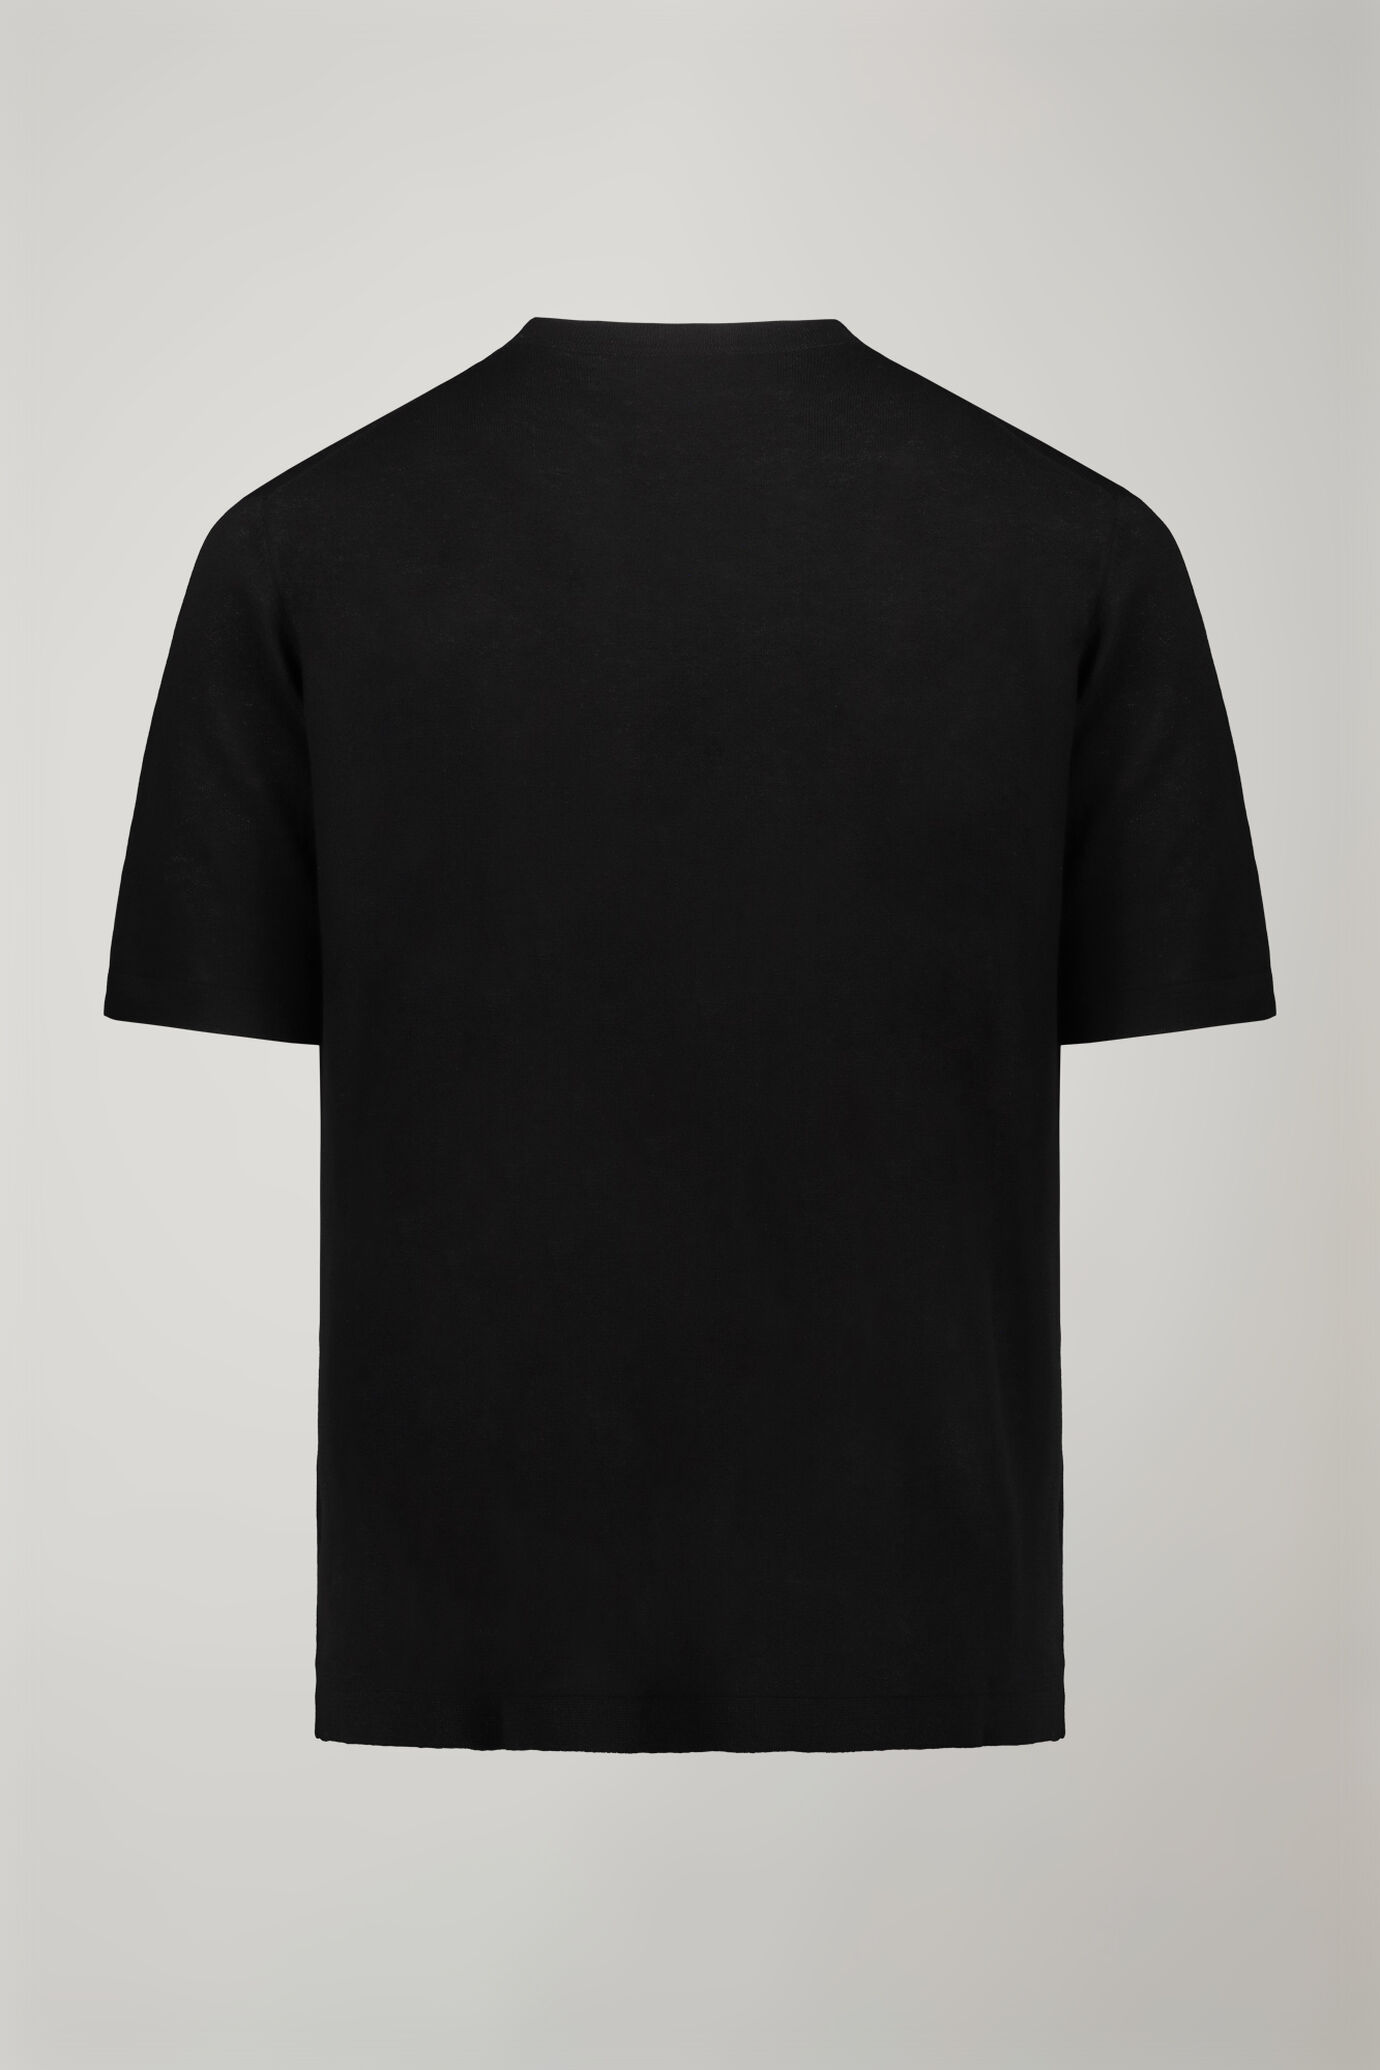 Men's knitted t-shirt 100% cotton short-sleeved regular fit image number 5